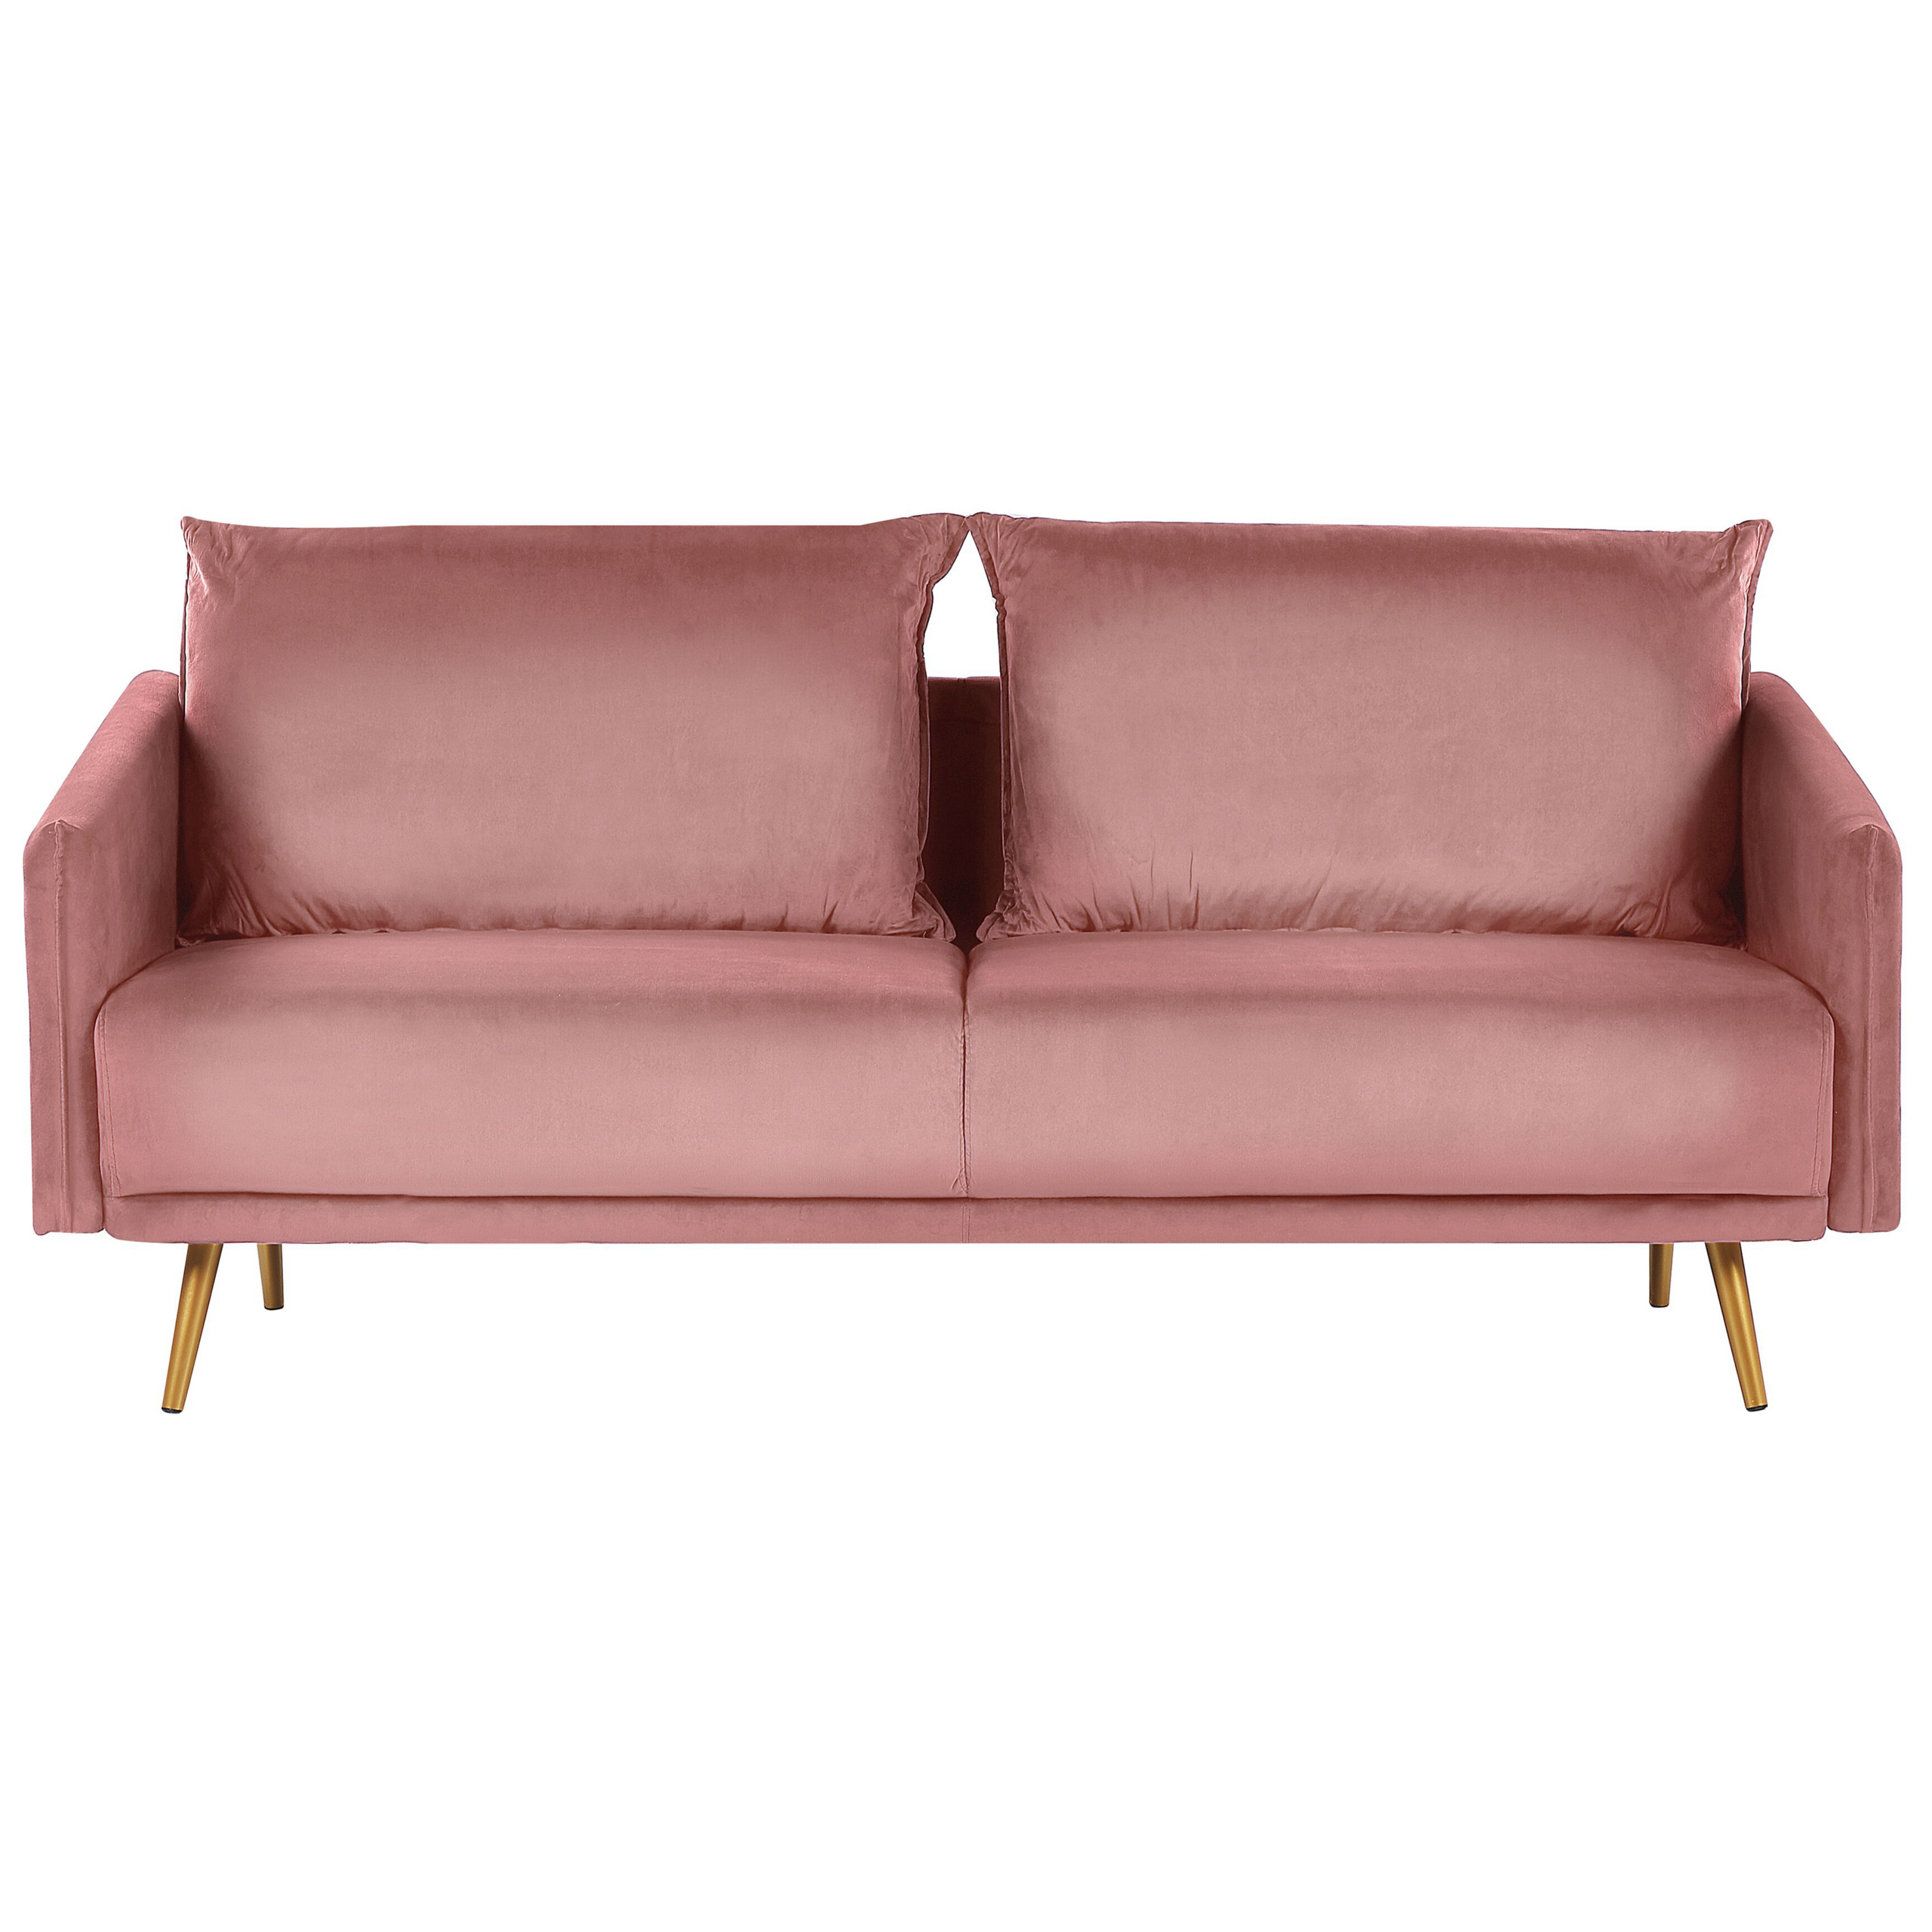 Beliani Sofa Pink Velvet 3 Seater Back Cushioned Seat Metal Golden Legs Retro Glam